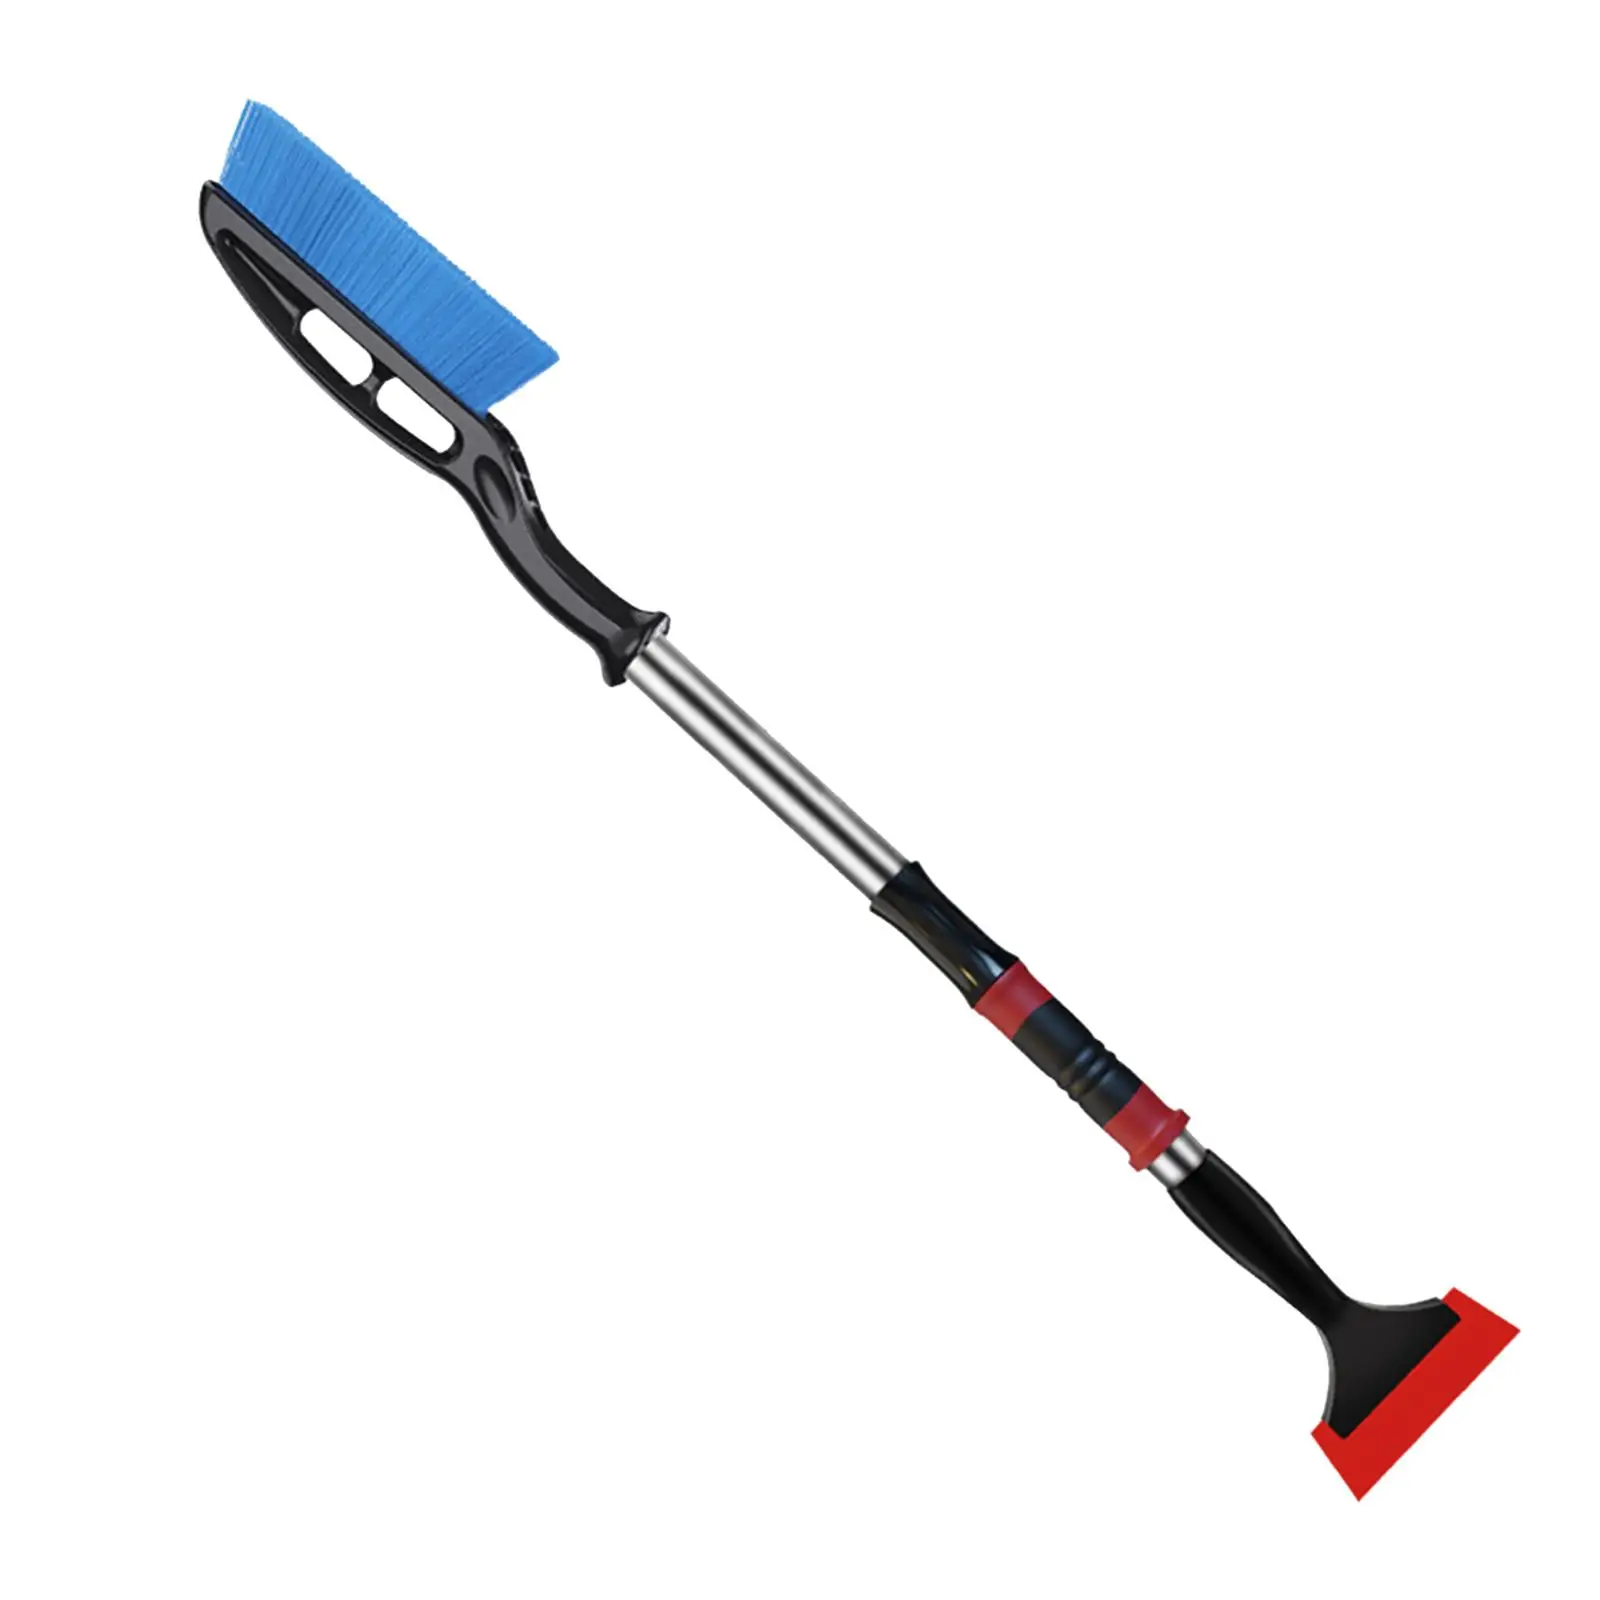 Car Snow Shovel Brush Tool Snow Scraper Portable Universal for Vehicles